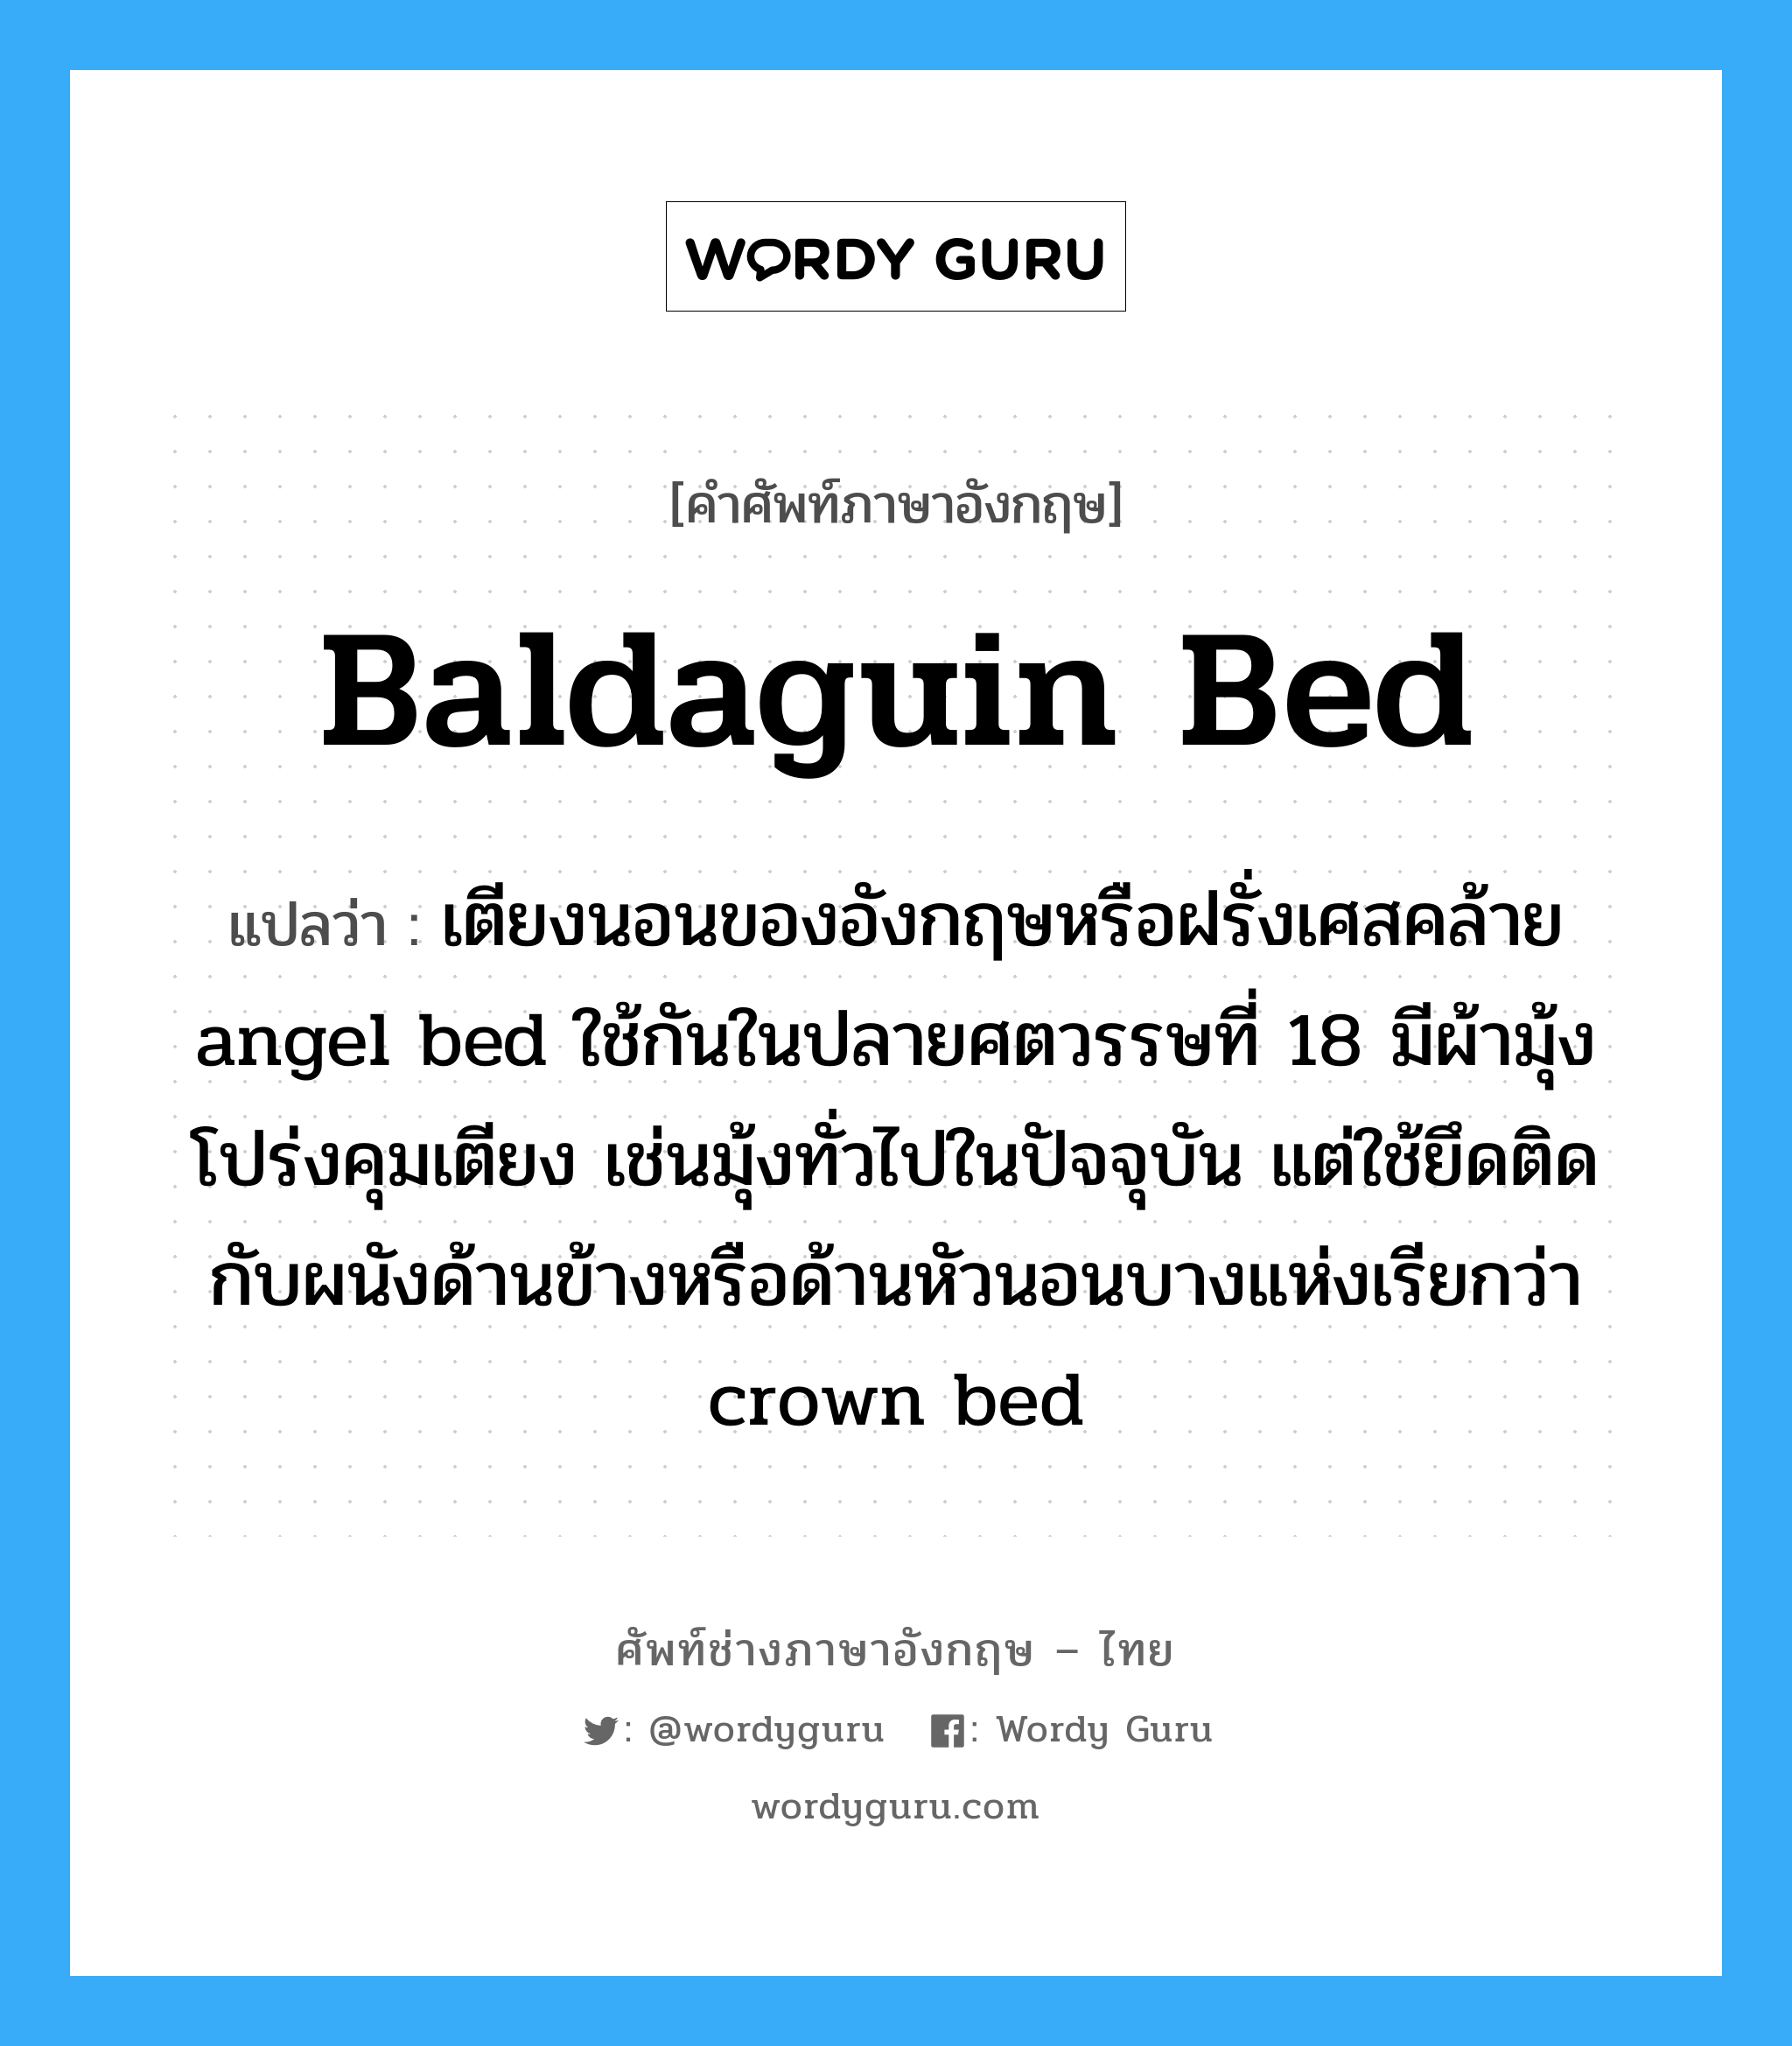 baldaguin bed แปลว่า?, คำศัพท์ช่างภาษาอังกฤษ - ไทย baldaguin bed คำศัพท์ภาษาอังกฤษ baldaguin bed แปลว่า เตียงนอนของอังกฤษหรือฝรั่งเศสคล้าย angel bed ใช้กันในปลายศตวรรษที่ 18 มีผ้ามุ้งโปร่งคุมเตียง เช่นมุ้งทั่วไปในปัจจุบัน แต่ใช้ยึดติดกับผนังด้านข้างหรือด้านหัวนอนบางแห่งเรียกว่า crown bed